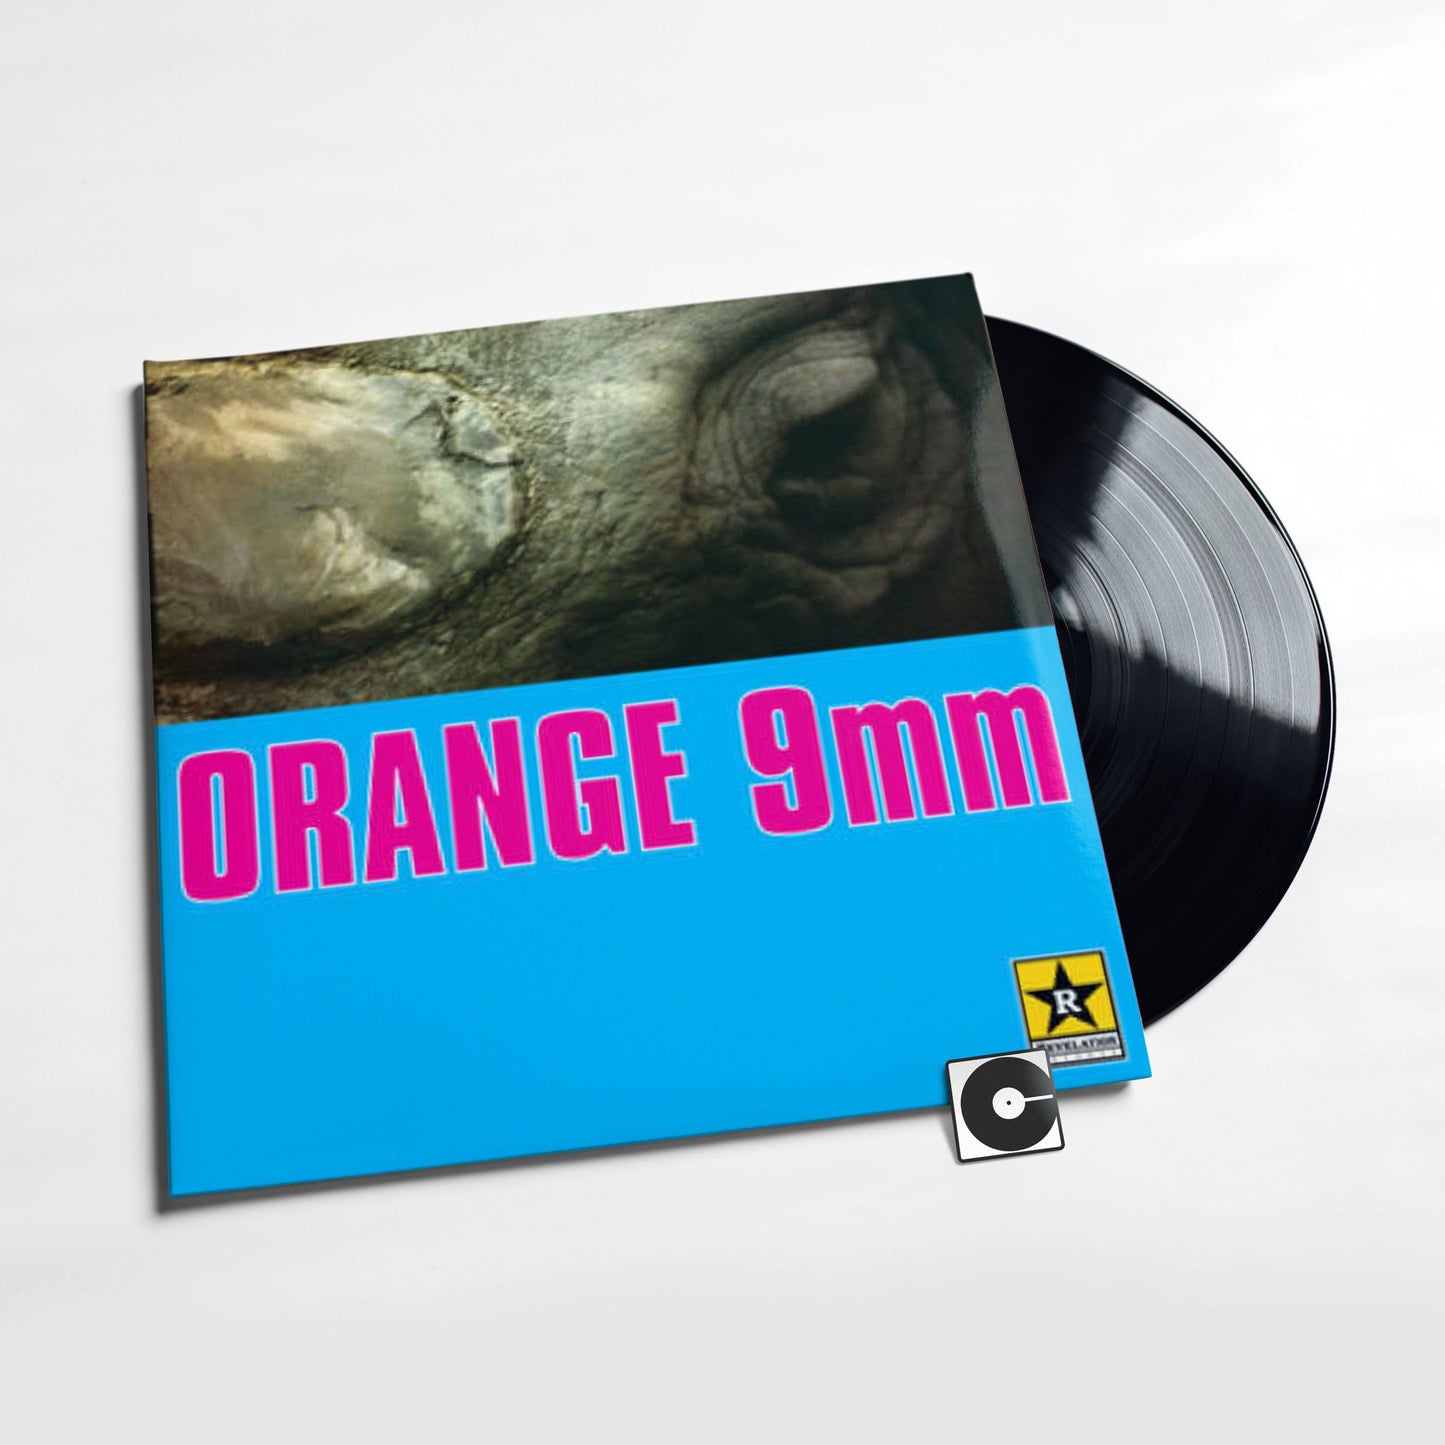 Orange 9mm - "Orange 9mm"